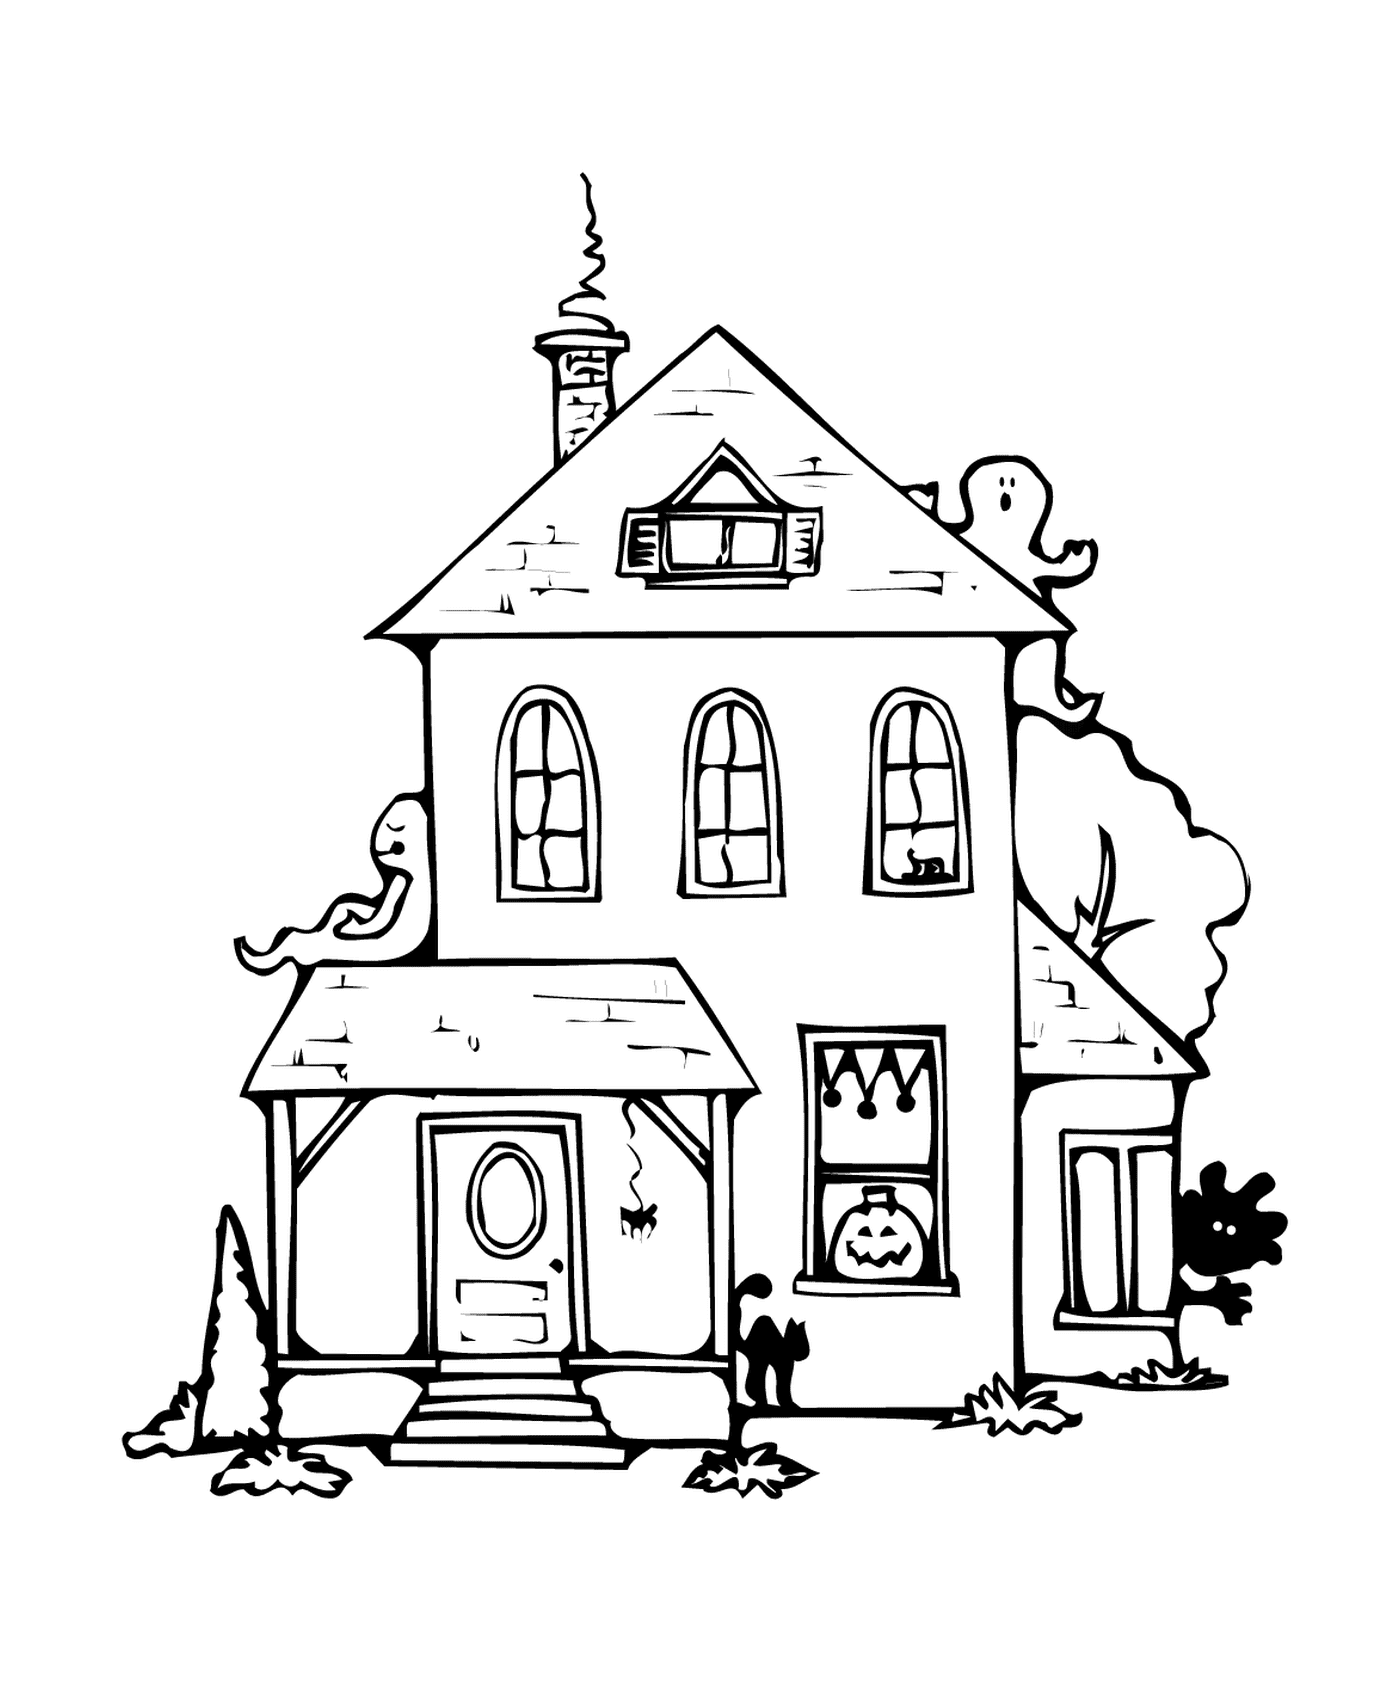  Old Halloween haunted house 